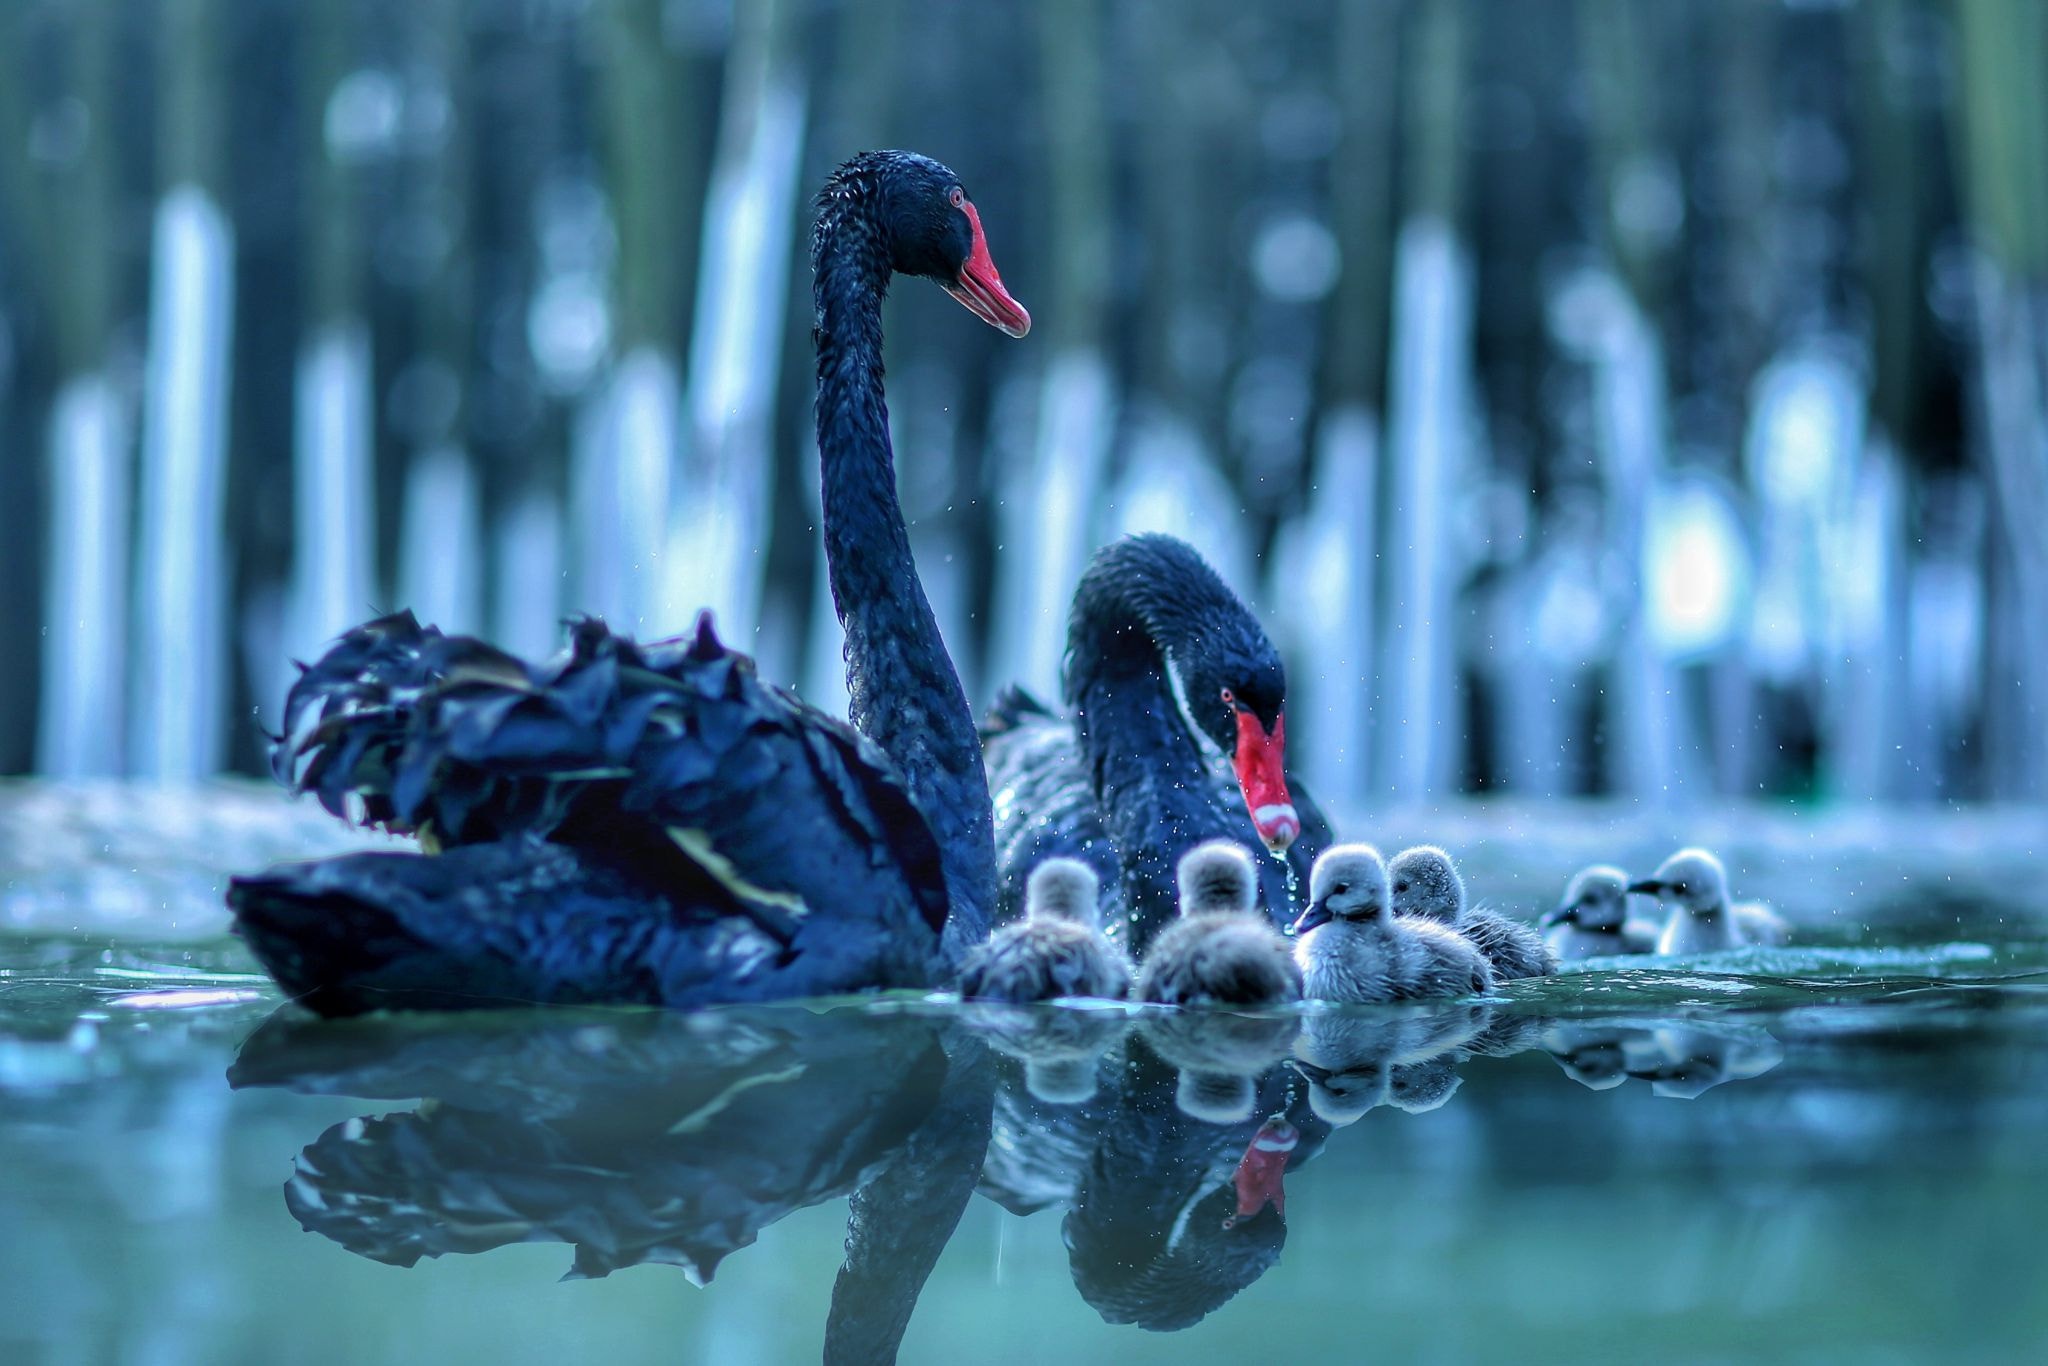 Black Swan HD Wallpaper